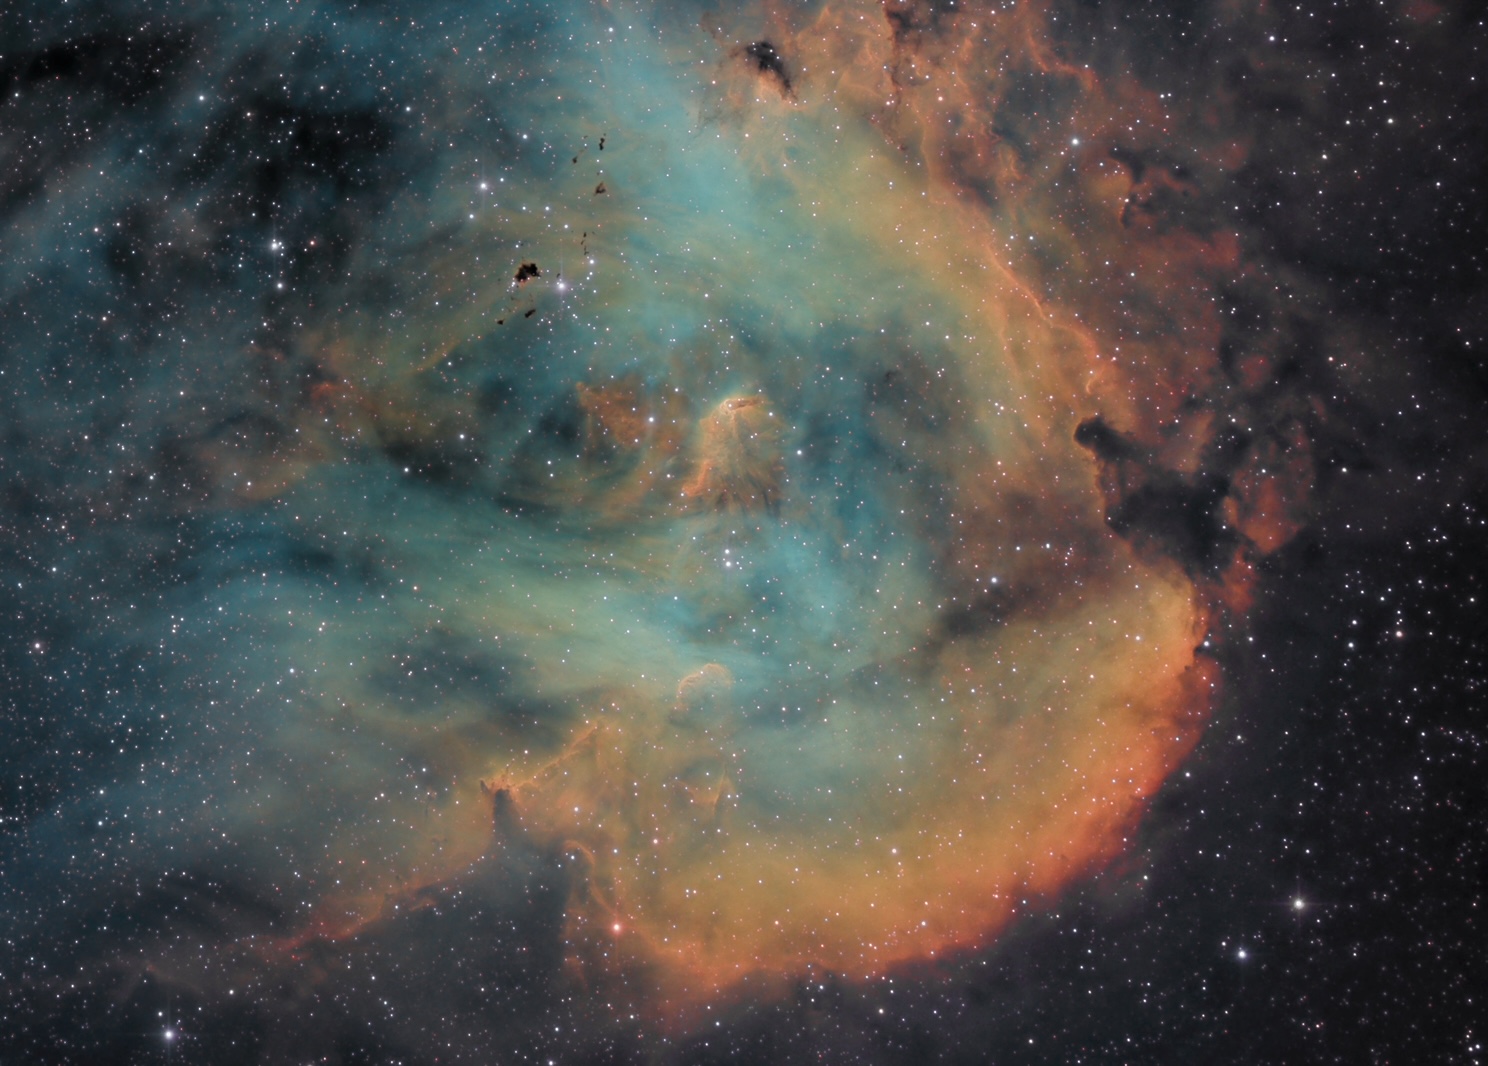 IC 2944 Running Chicken Nebula SHO rev 2 Crop with DDP4 resized.jpeg